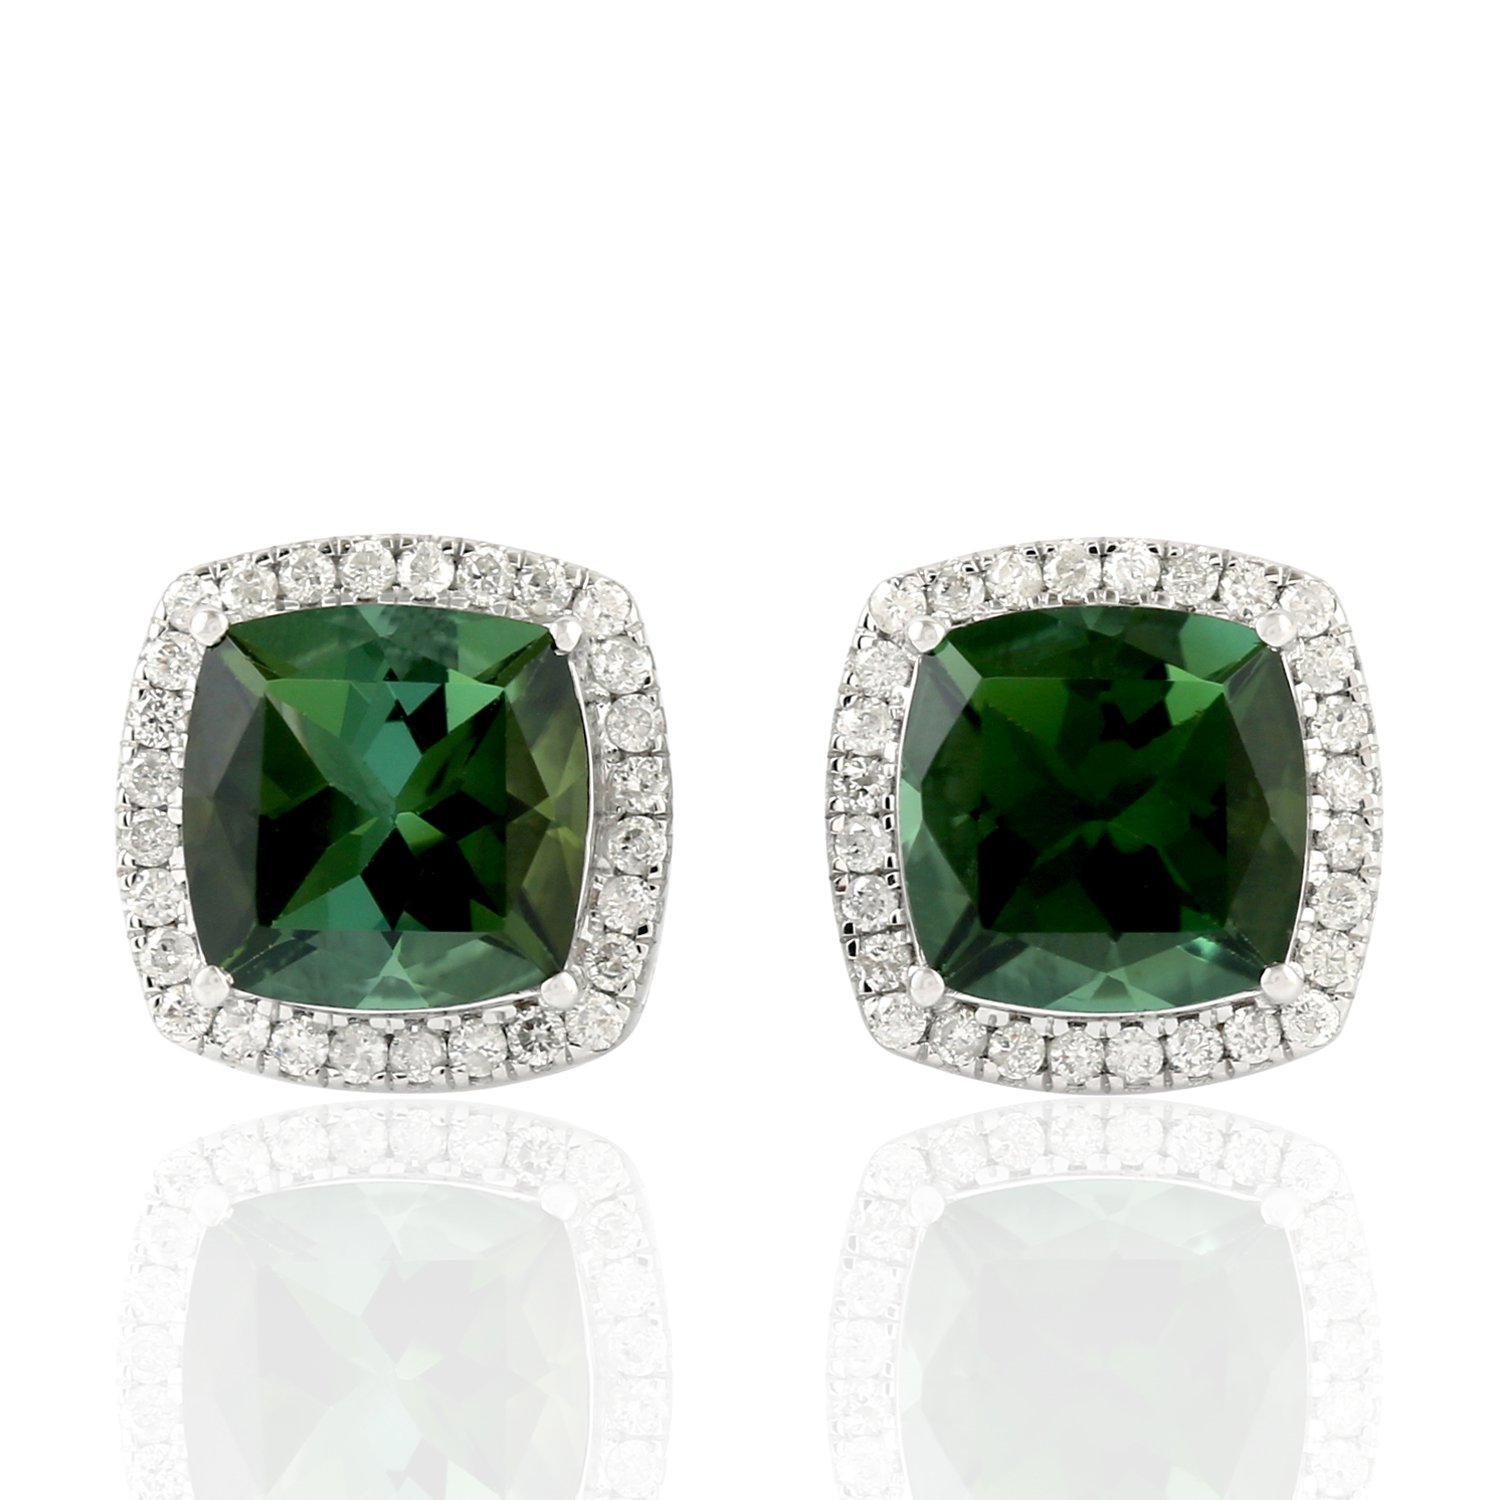 Brazilian Paraiba Tourmaline and Diamond Halo Stud Earrings | Rose gold diamond  earring, Earrings, Dazzling earrings